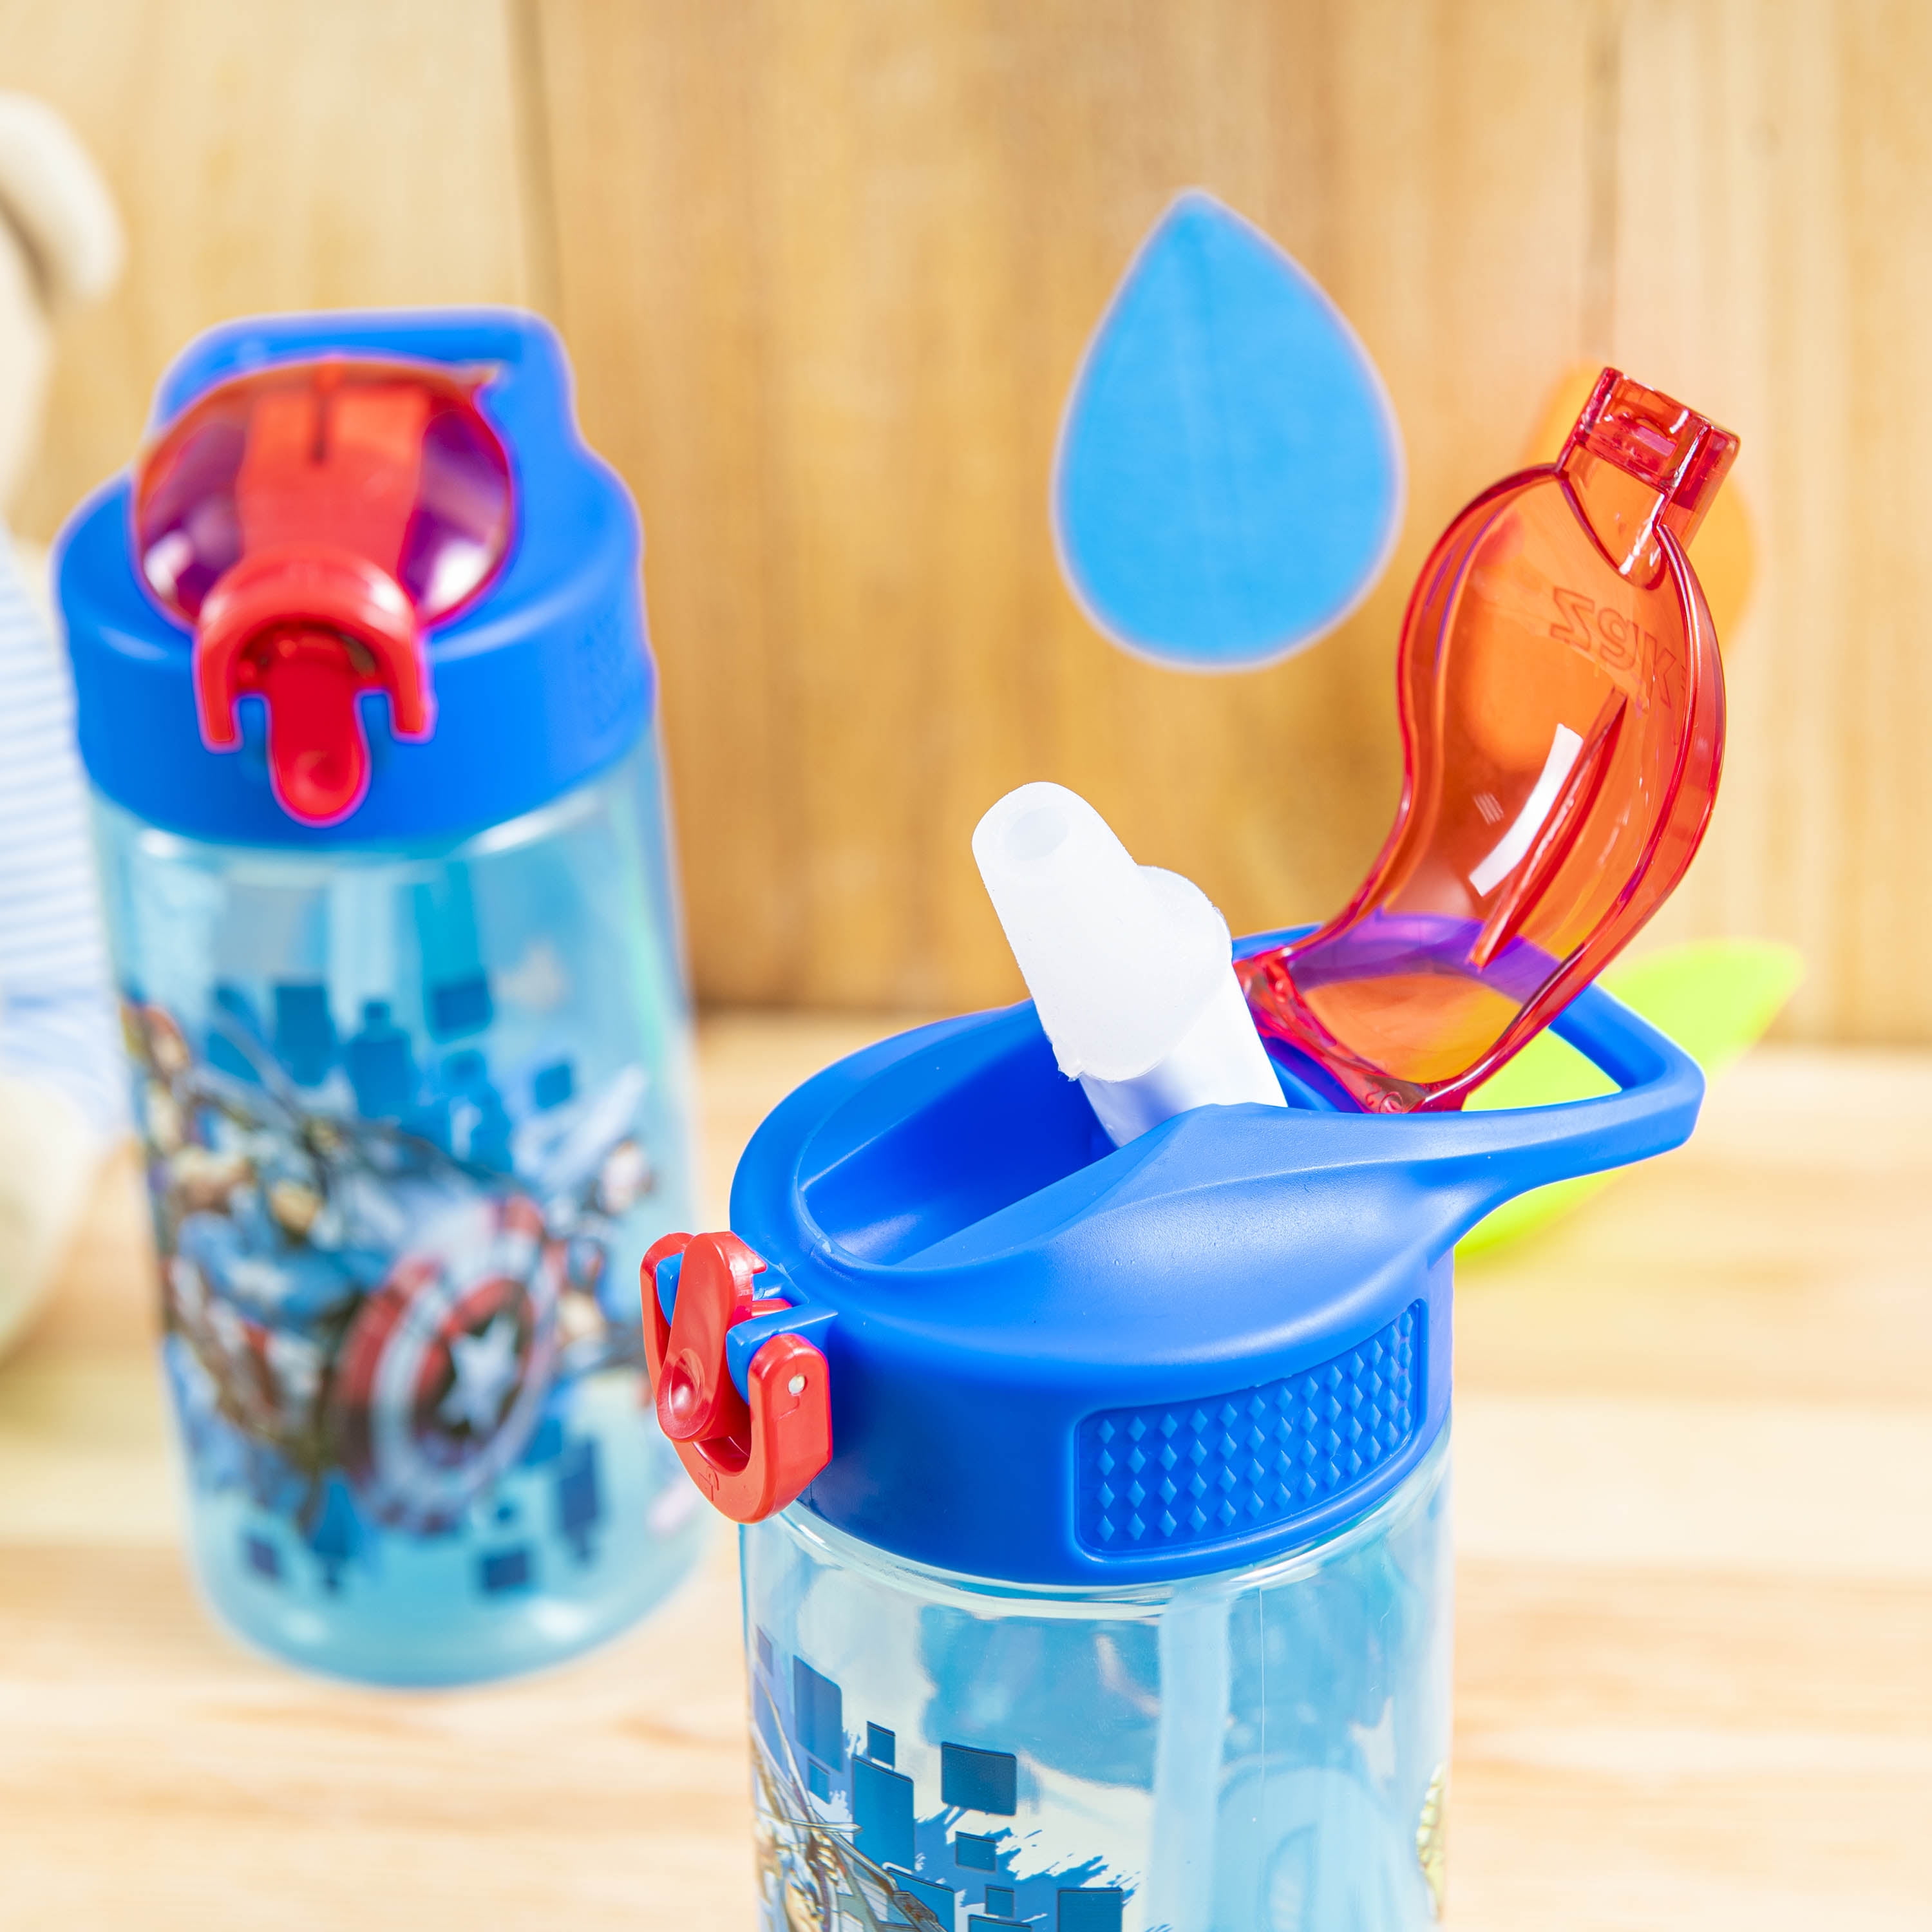 Zak Designs on Instagram: Teach kids the importance of hydration with Blippi  water bottles! (Link in bio) #explorelikeblippi #belikeblippi